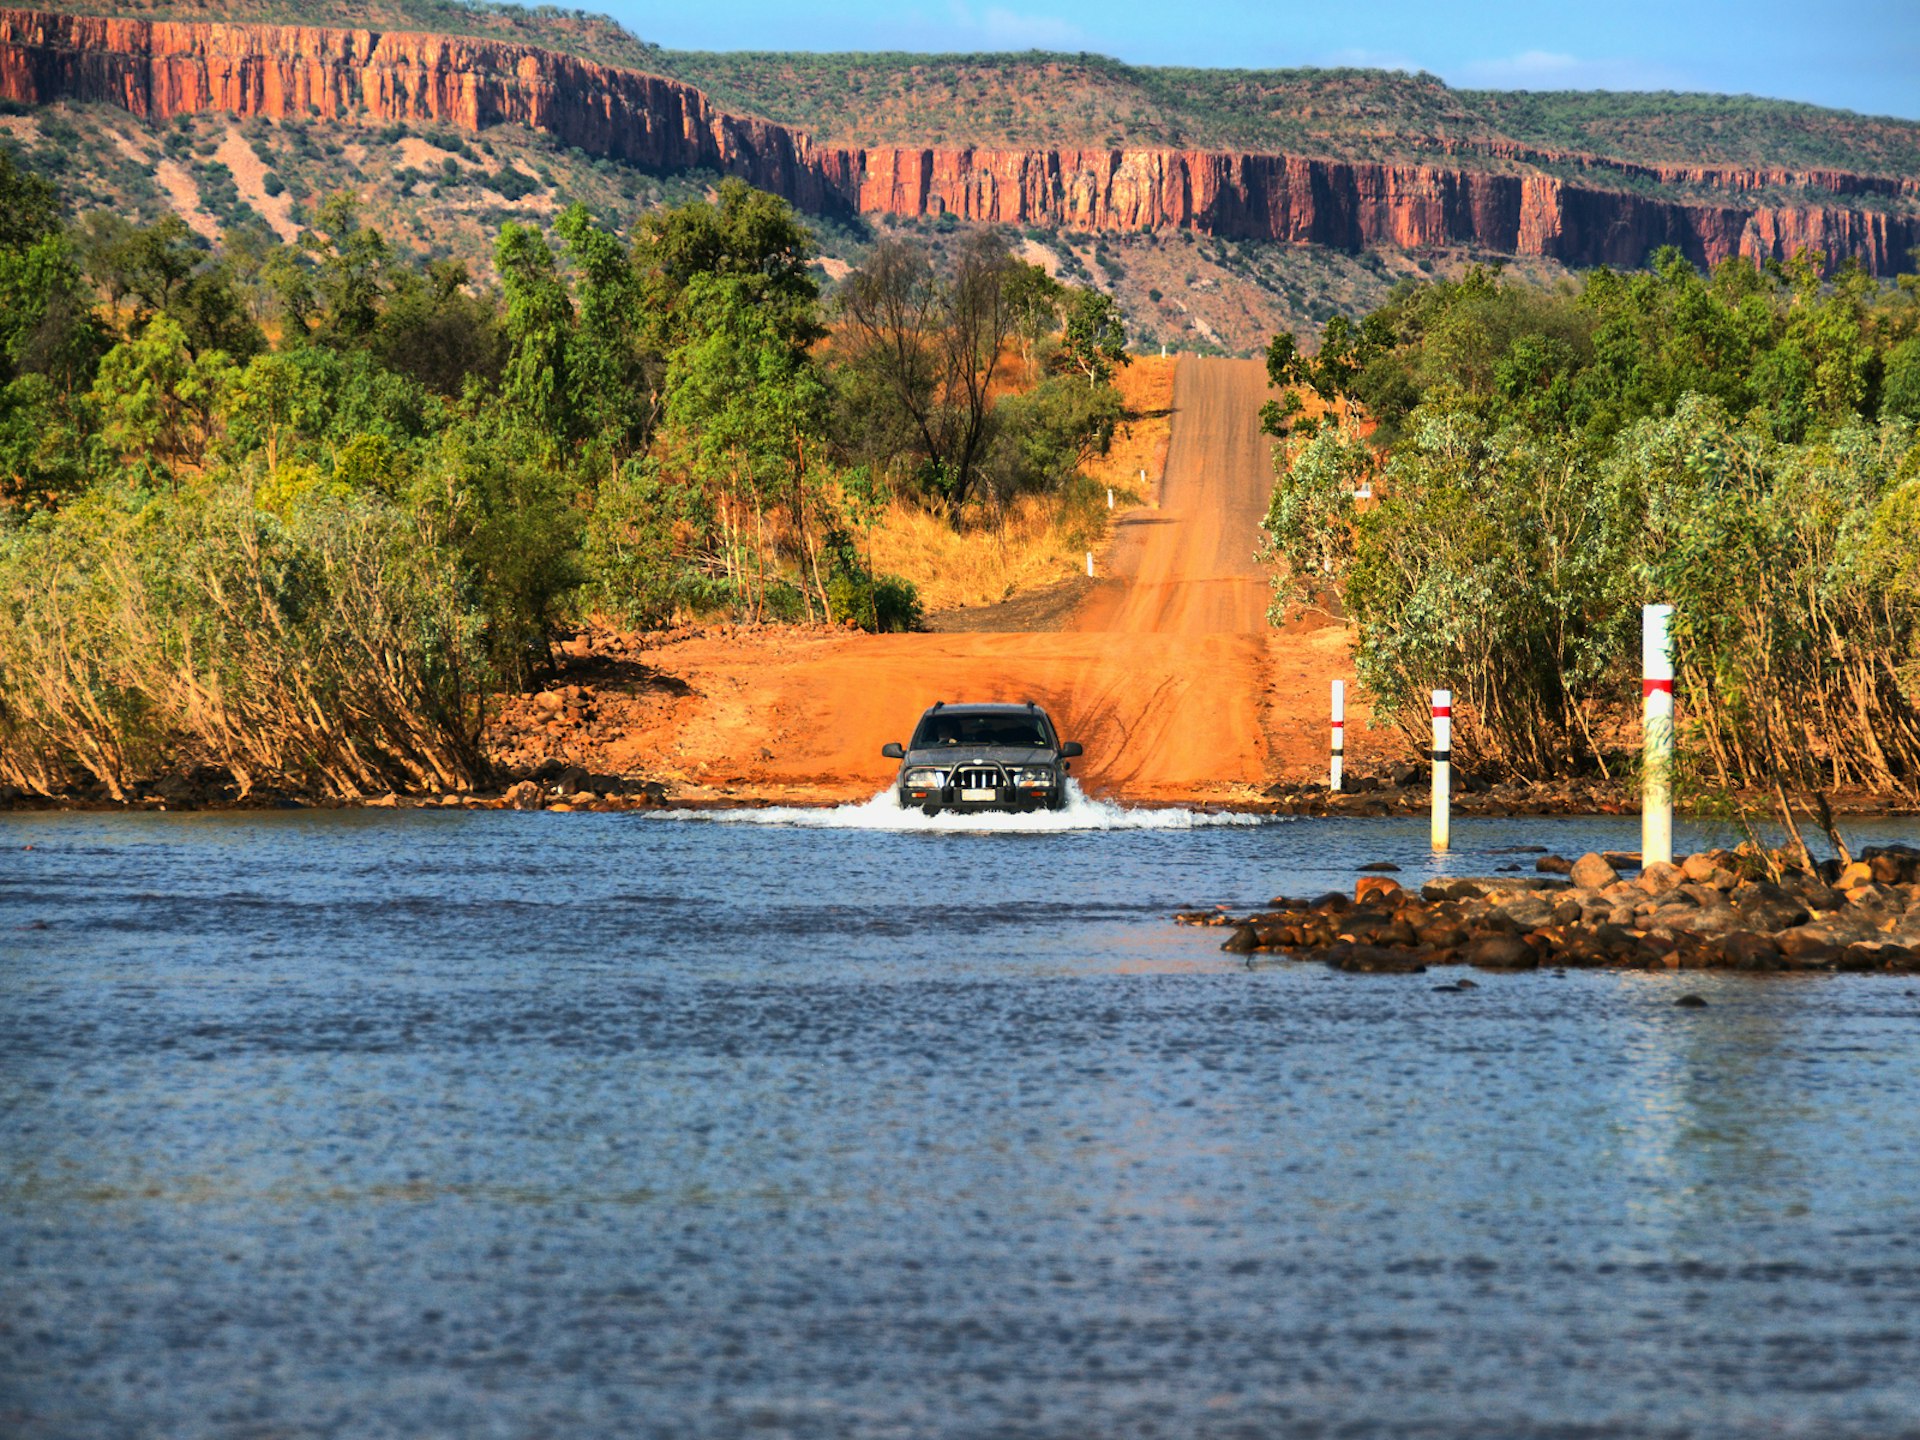 A 4x4 fords the Pentecost River © AustralianCamera / Shutterstock